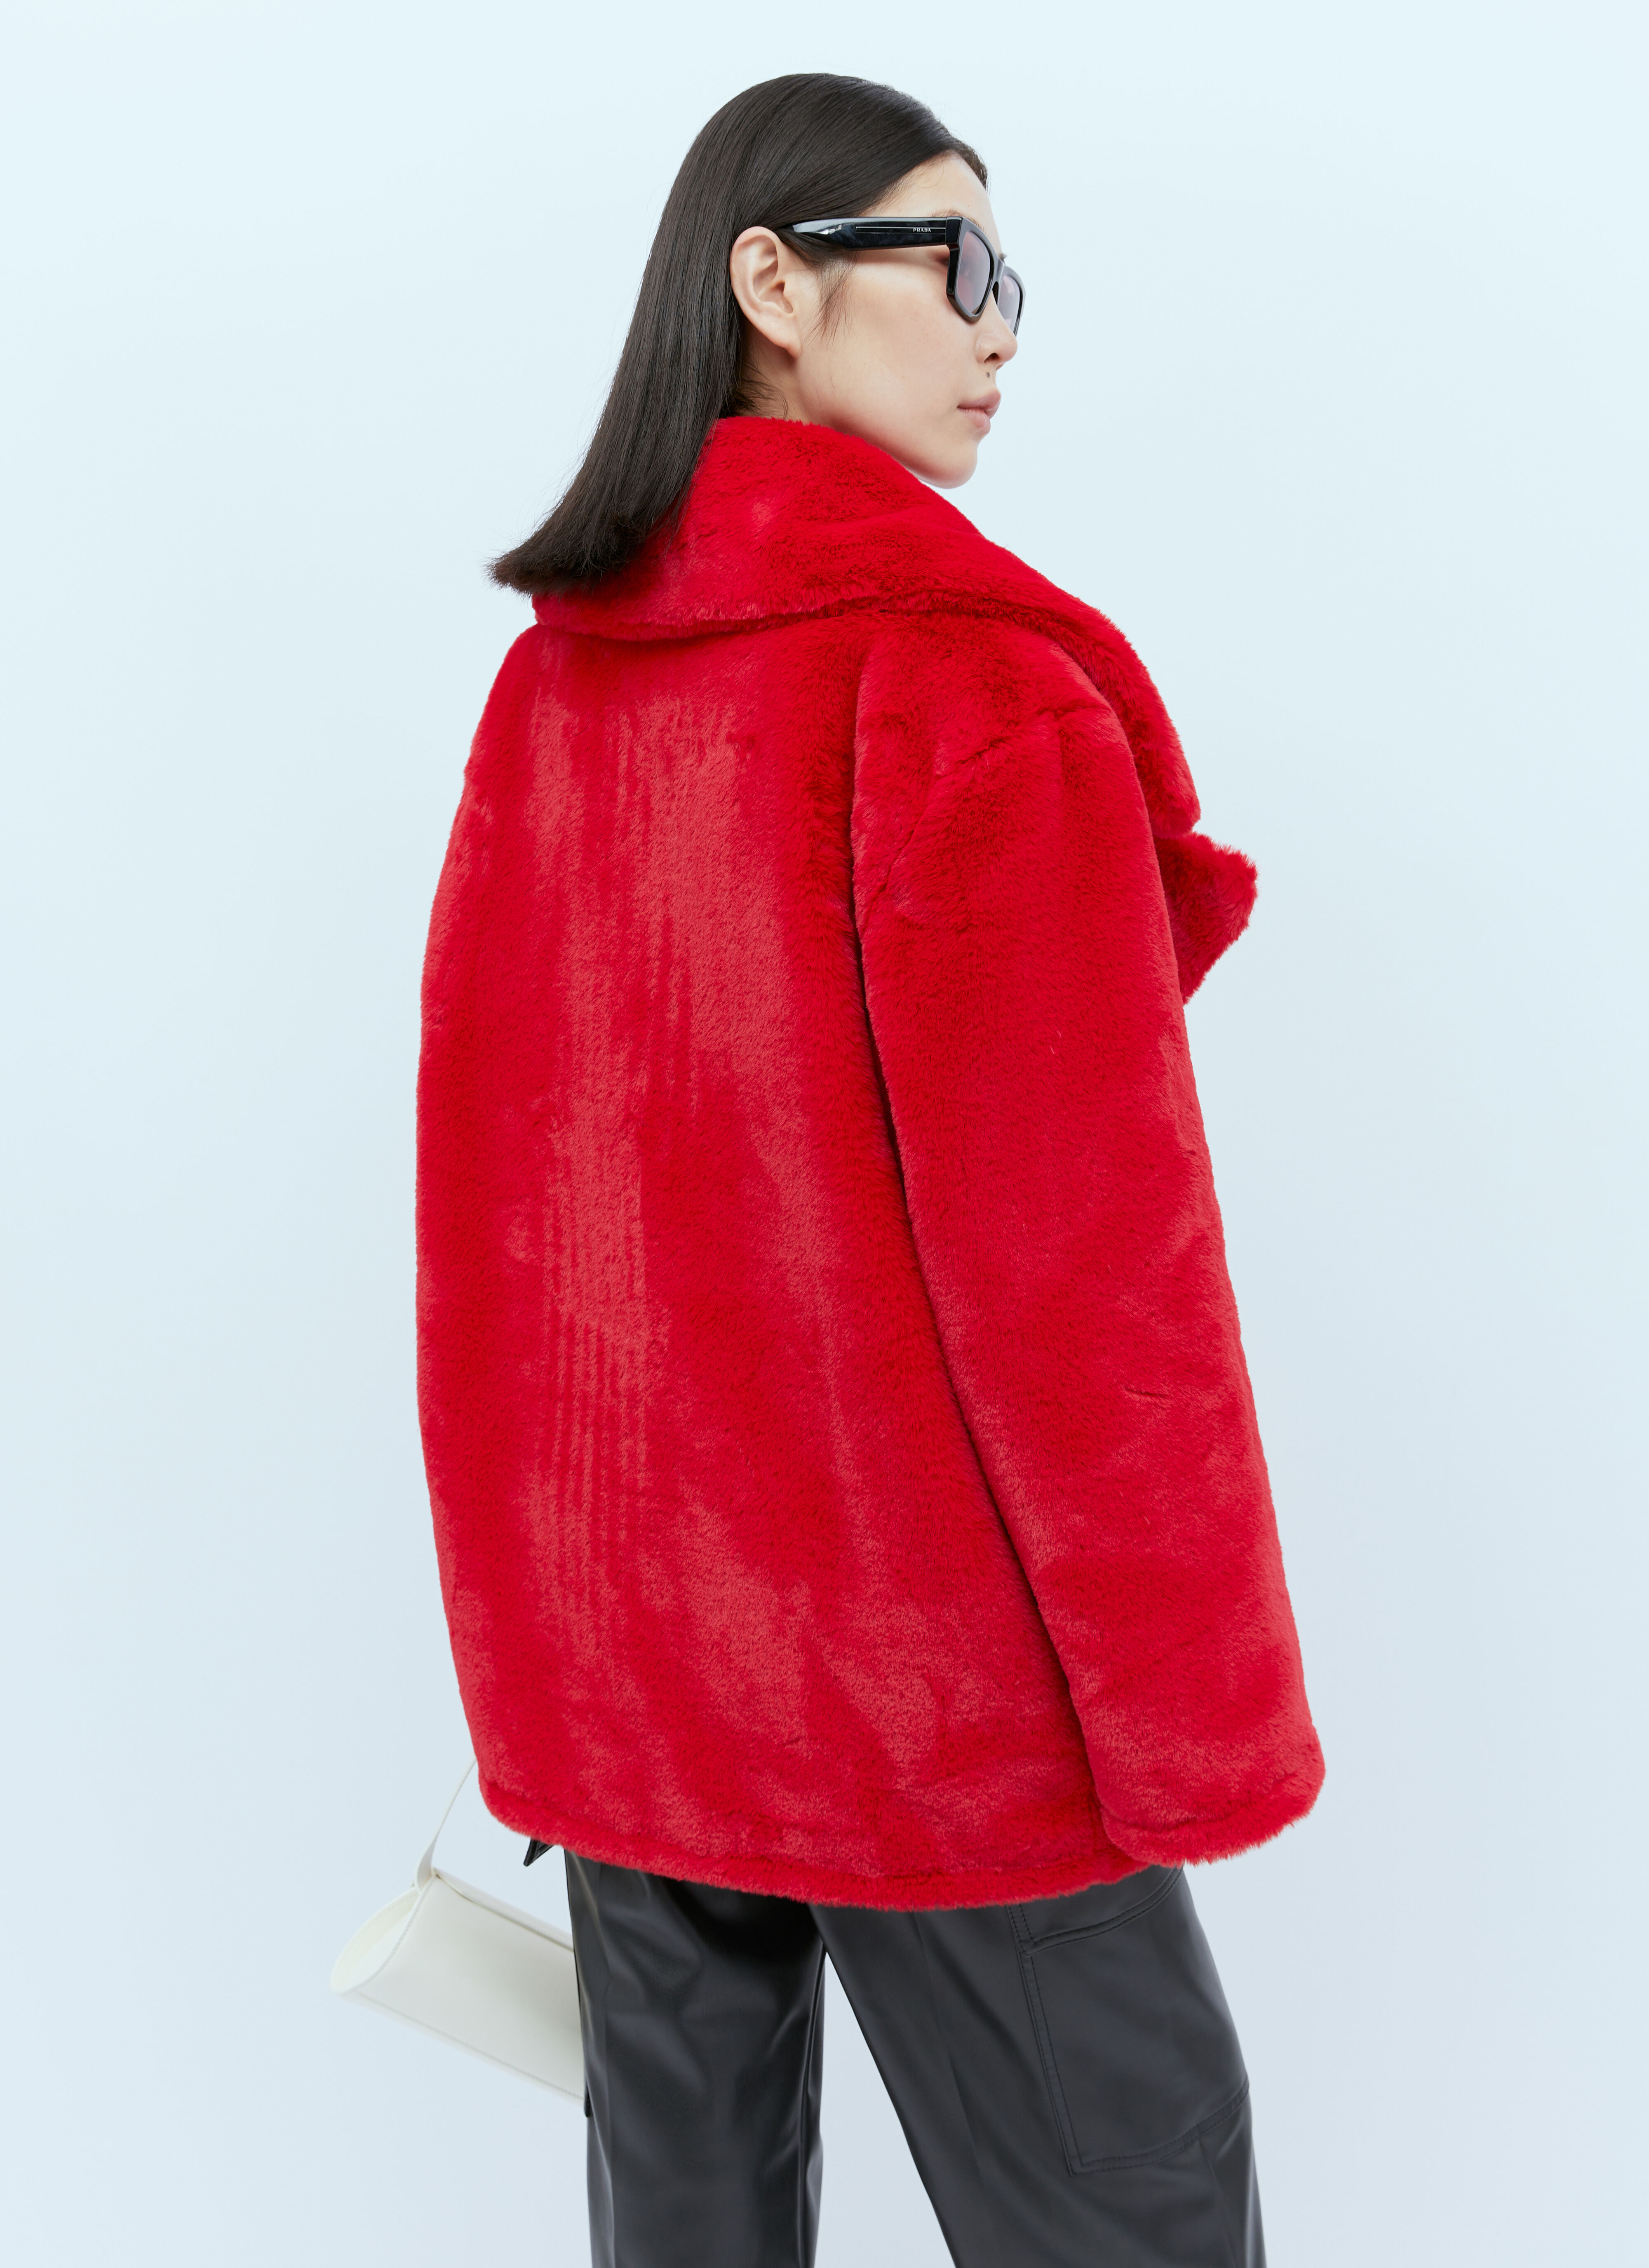 Stella McCartney Fur Free Fur Jacket Red stm0254004